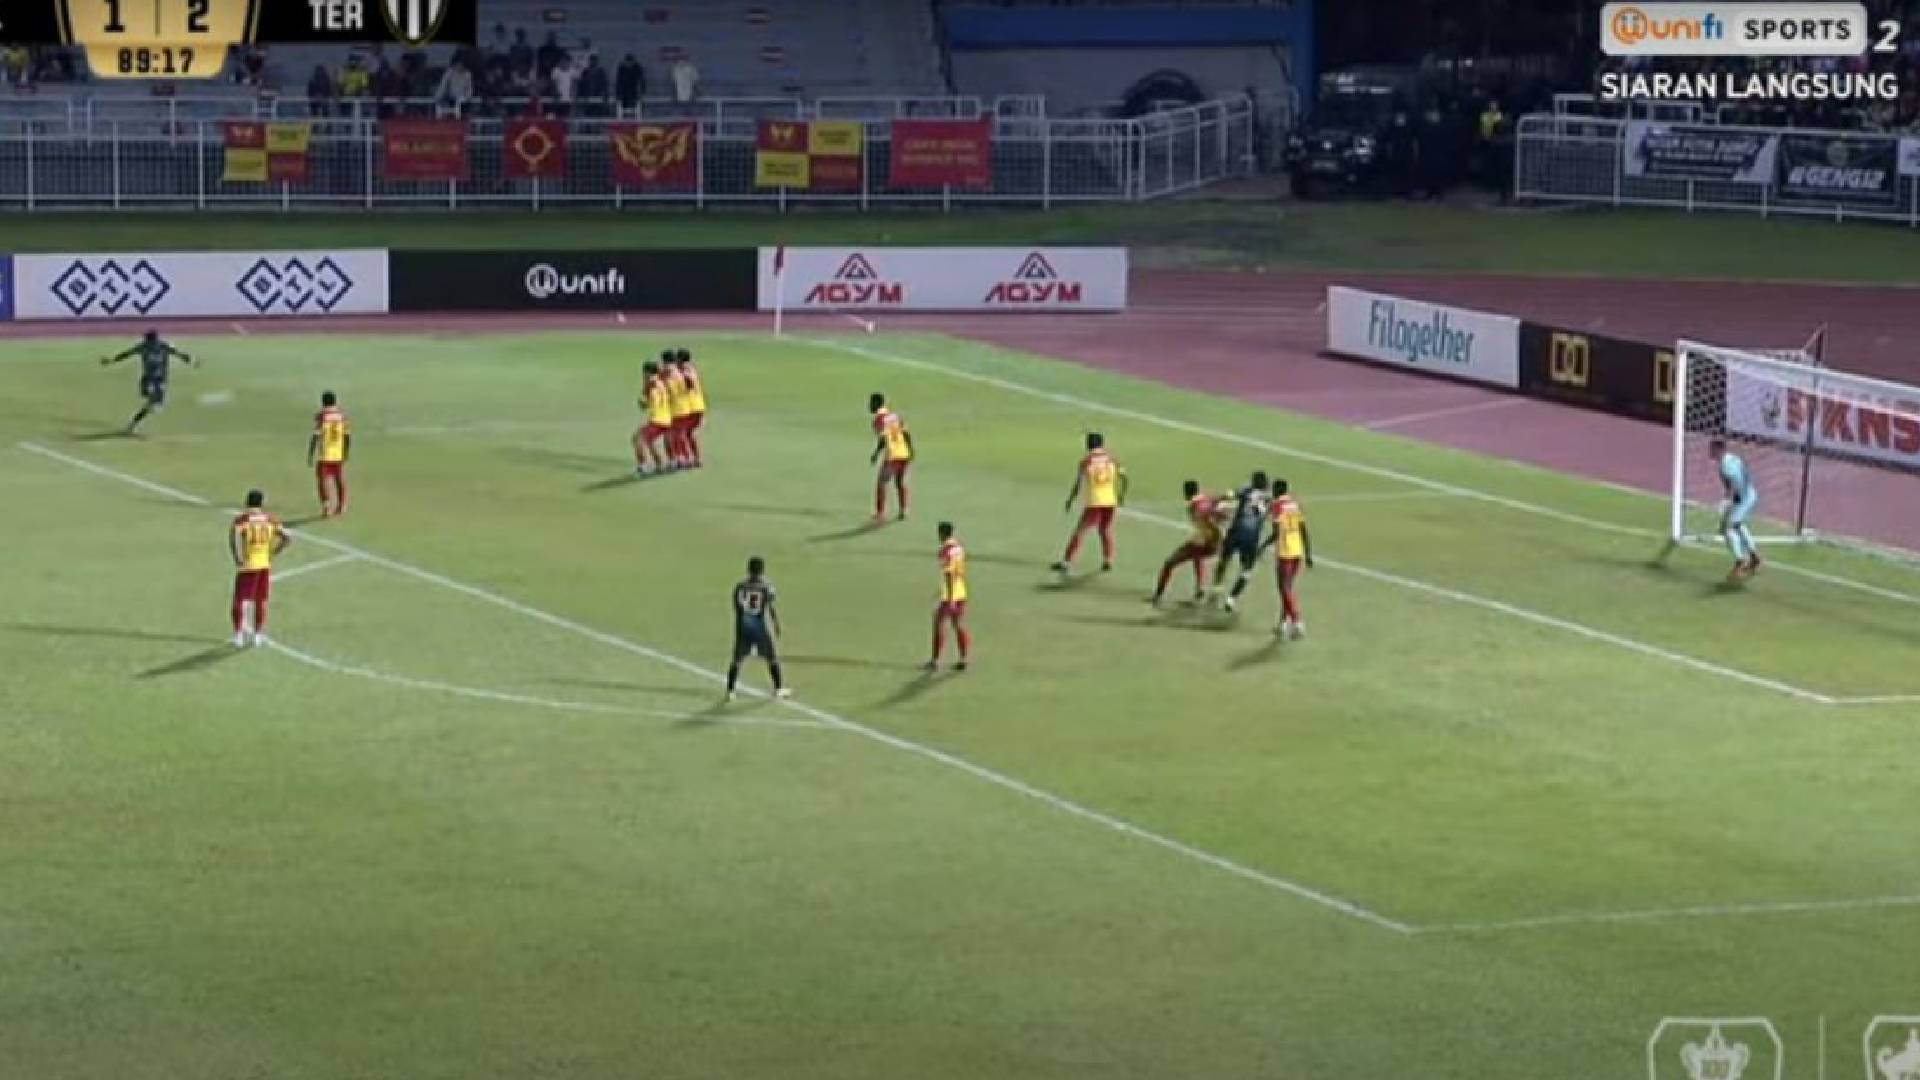 Piala Malaysia: Selangor Tumbang Di Gelanggang Sendiri Dibaham Terengganu